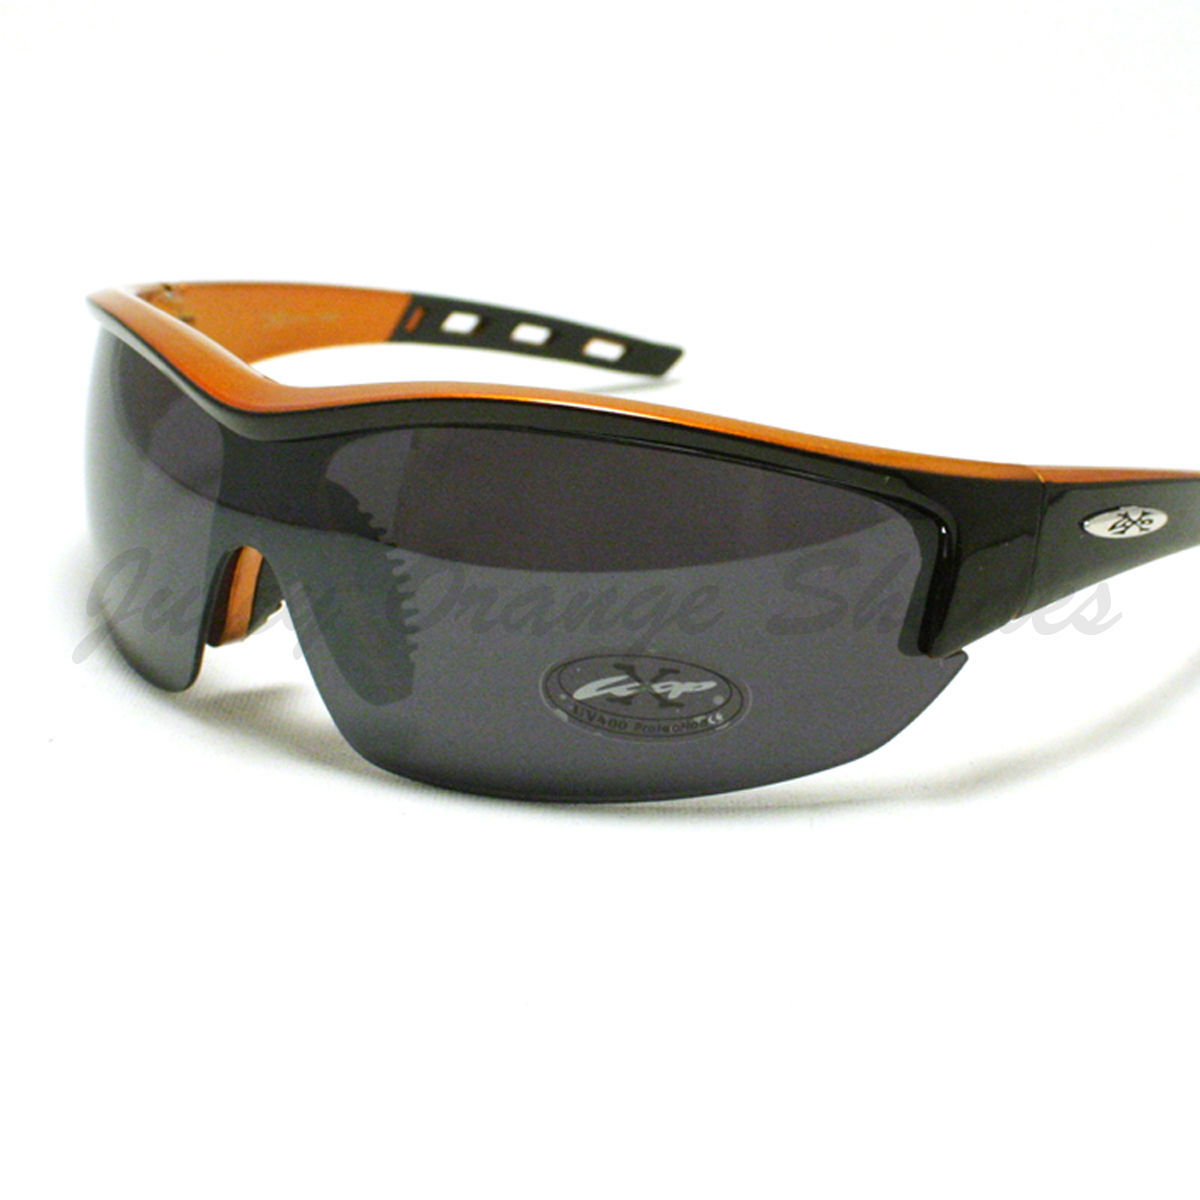 All Sports Sunglasses Wrap Around Rubber Nose Piece Comfort Eyewear - $18.49